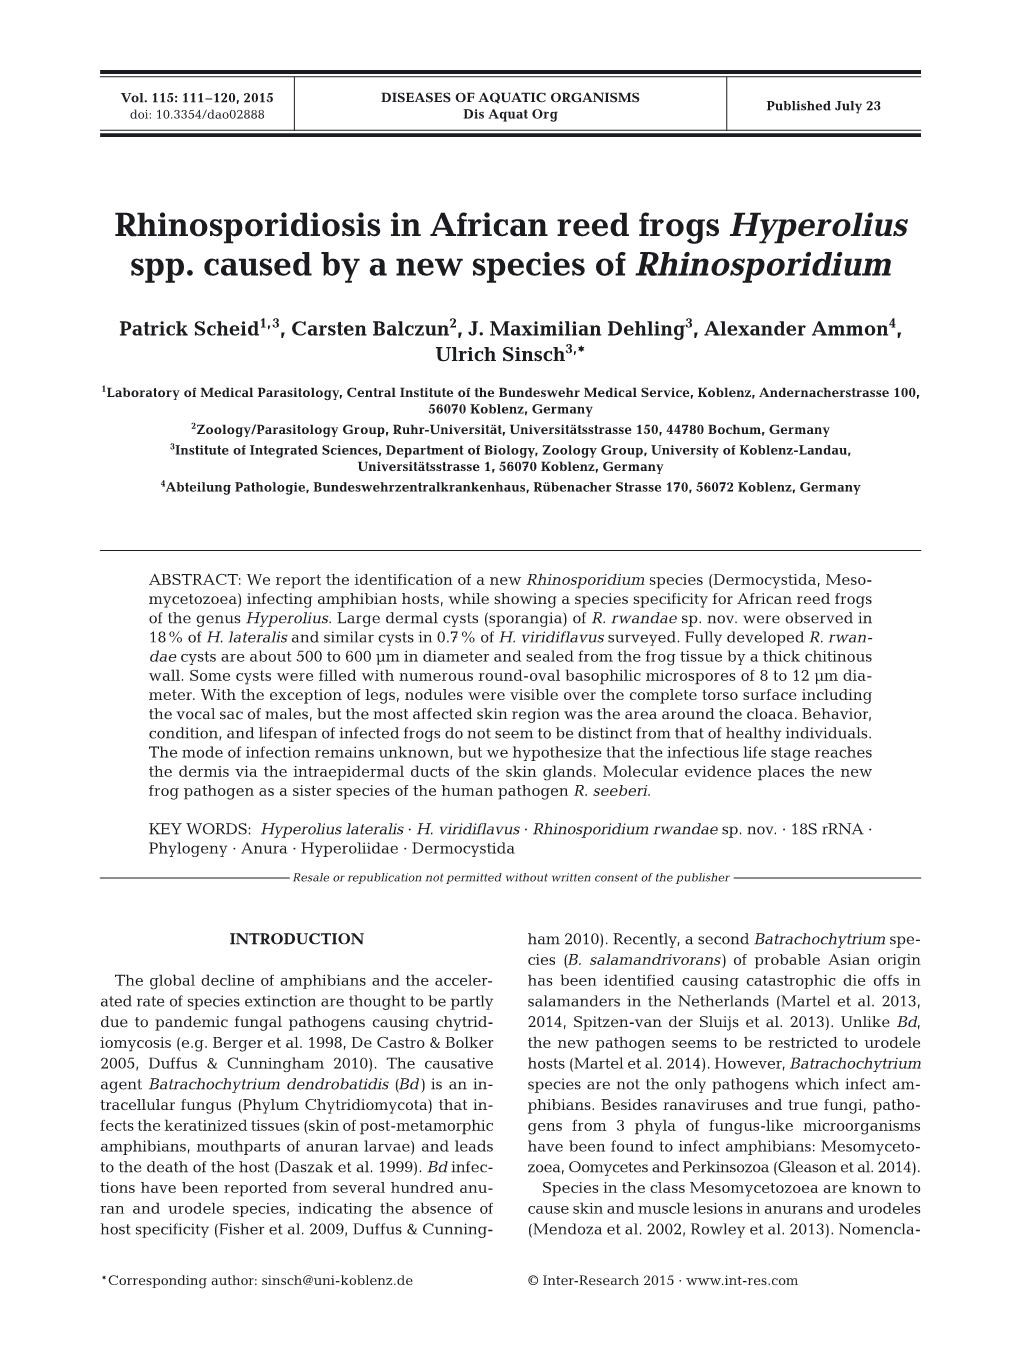 Rhinosporidiosis in African Reed Frogs Hyperolius Spp. Caused by a New Species of Rhinosporidium